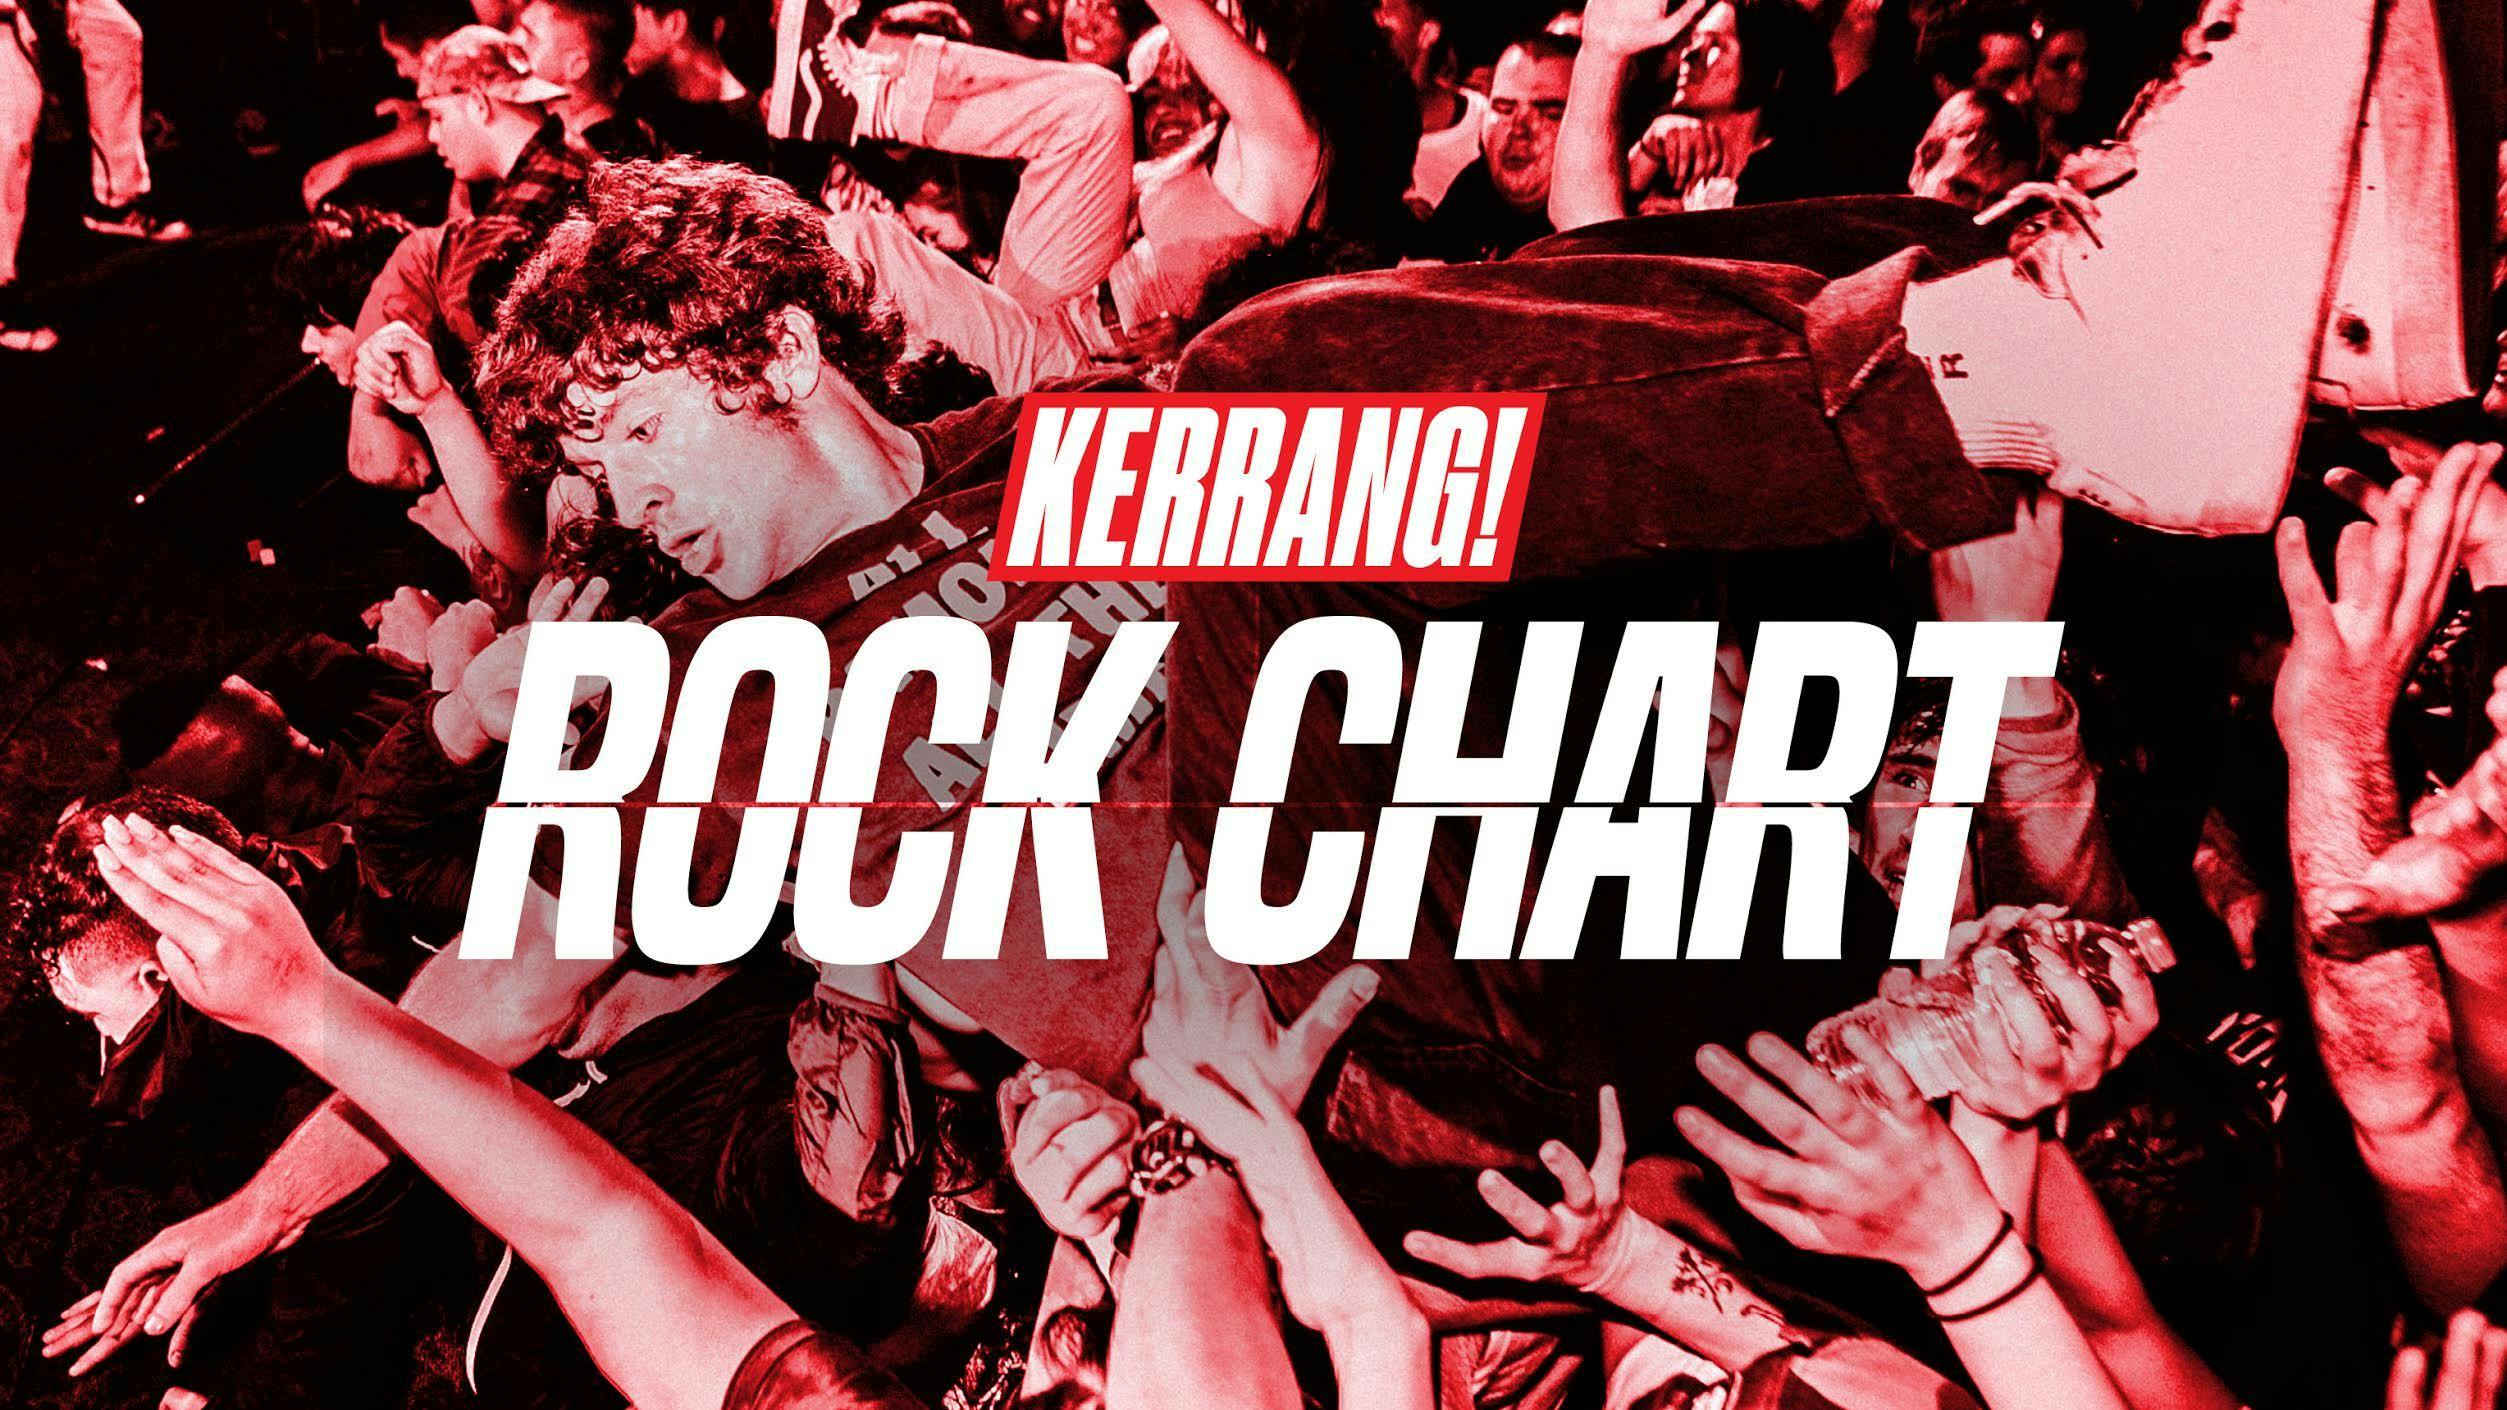 The Kerrang! Rock Chart